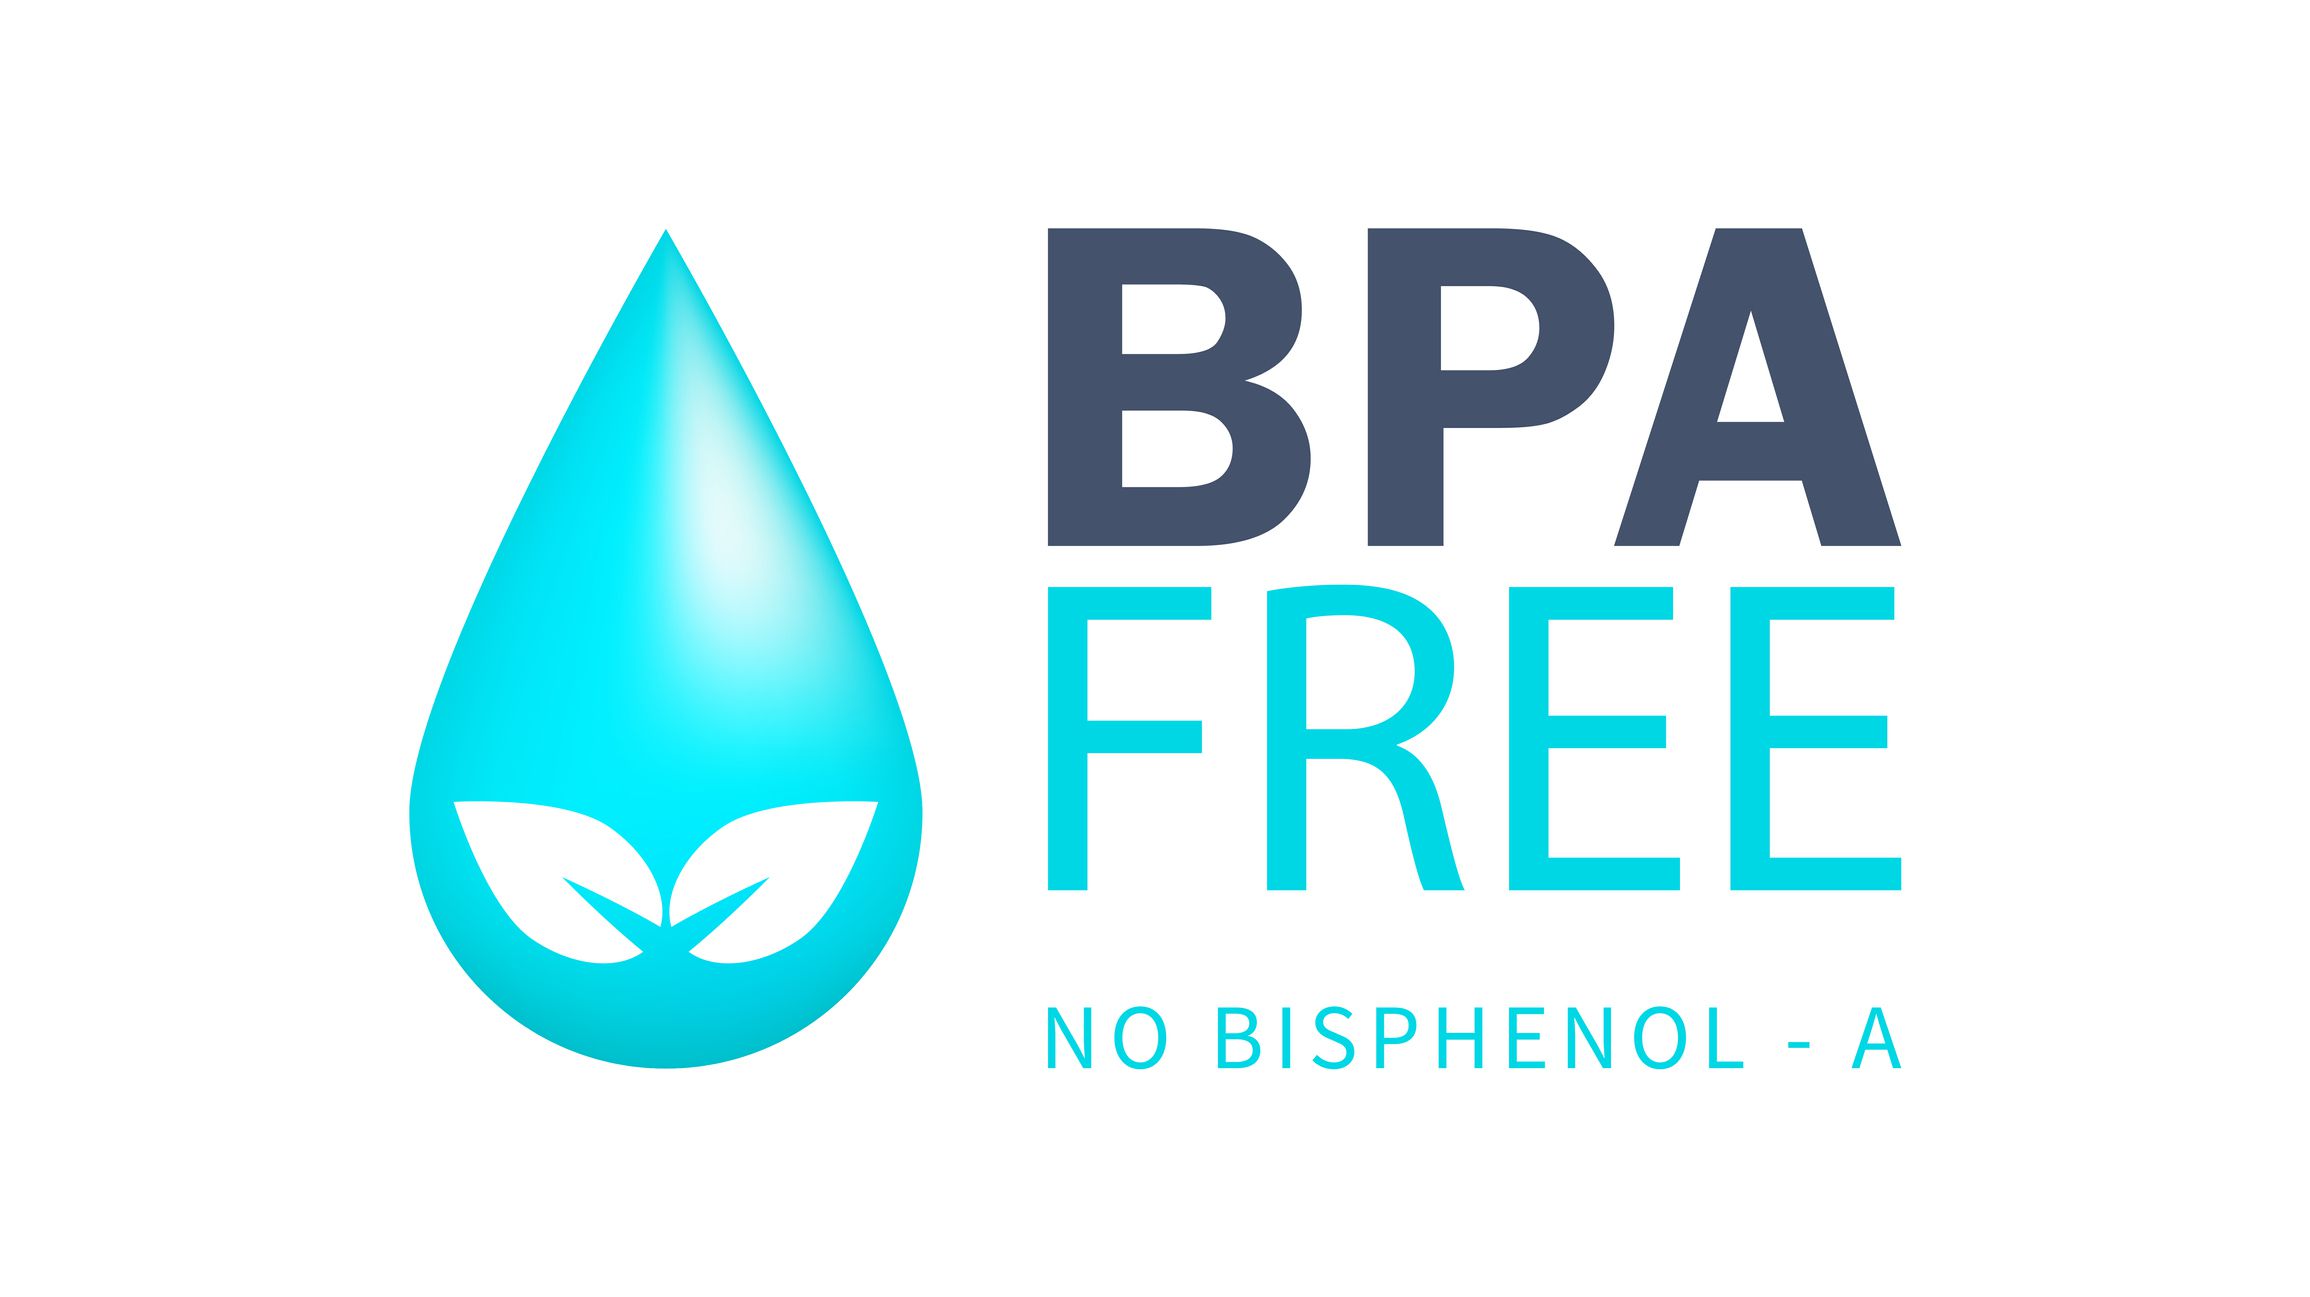 Etiqueta genérica sin BPA